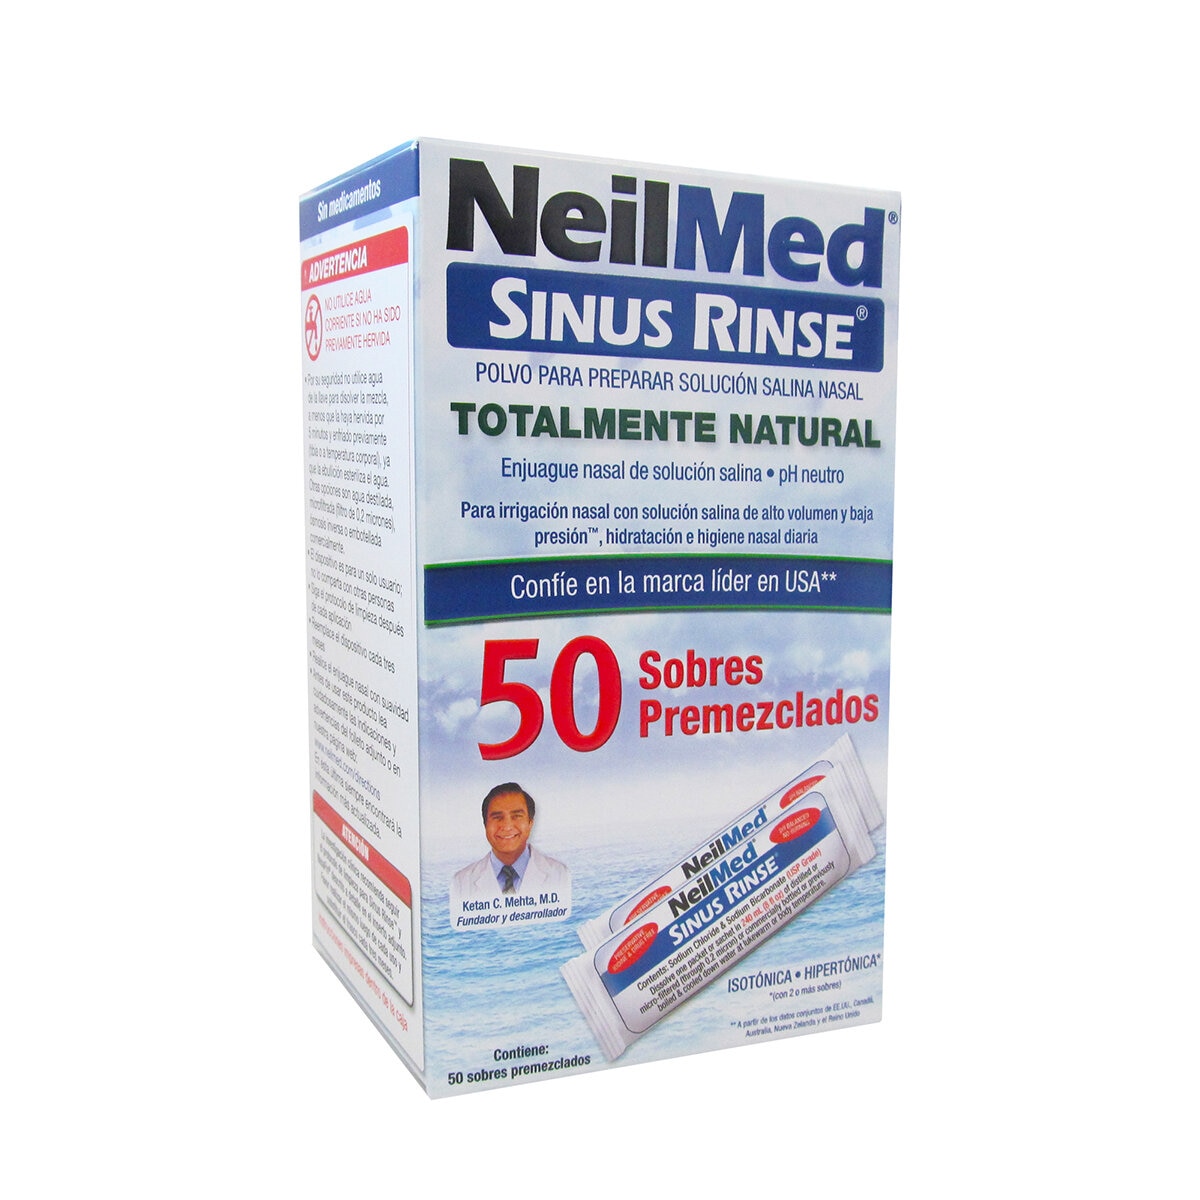 Neilmed Sinus Rinse 50 Sobres Premezclados (inc. Botella)